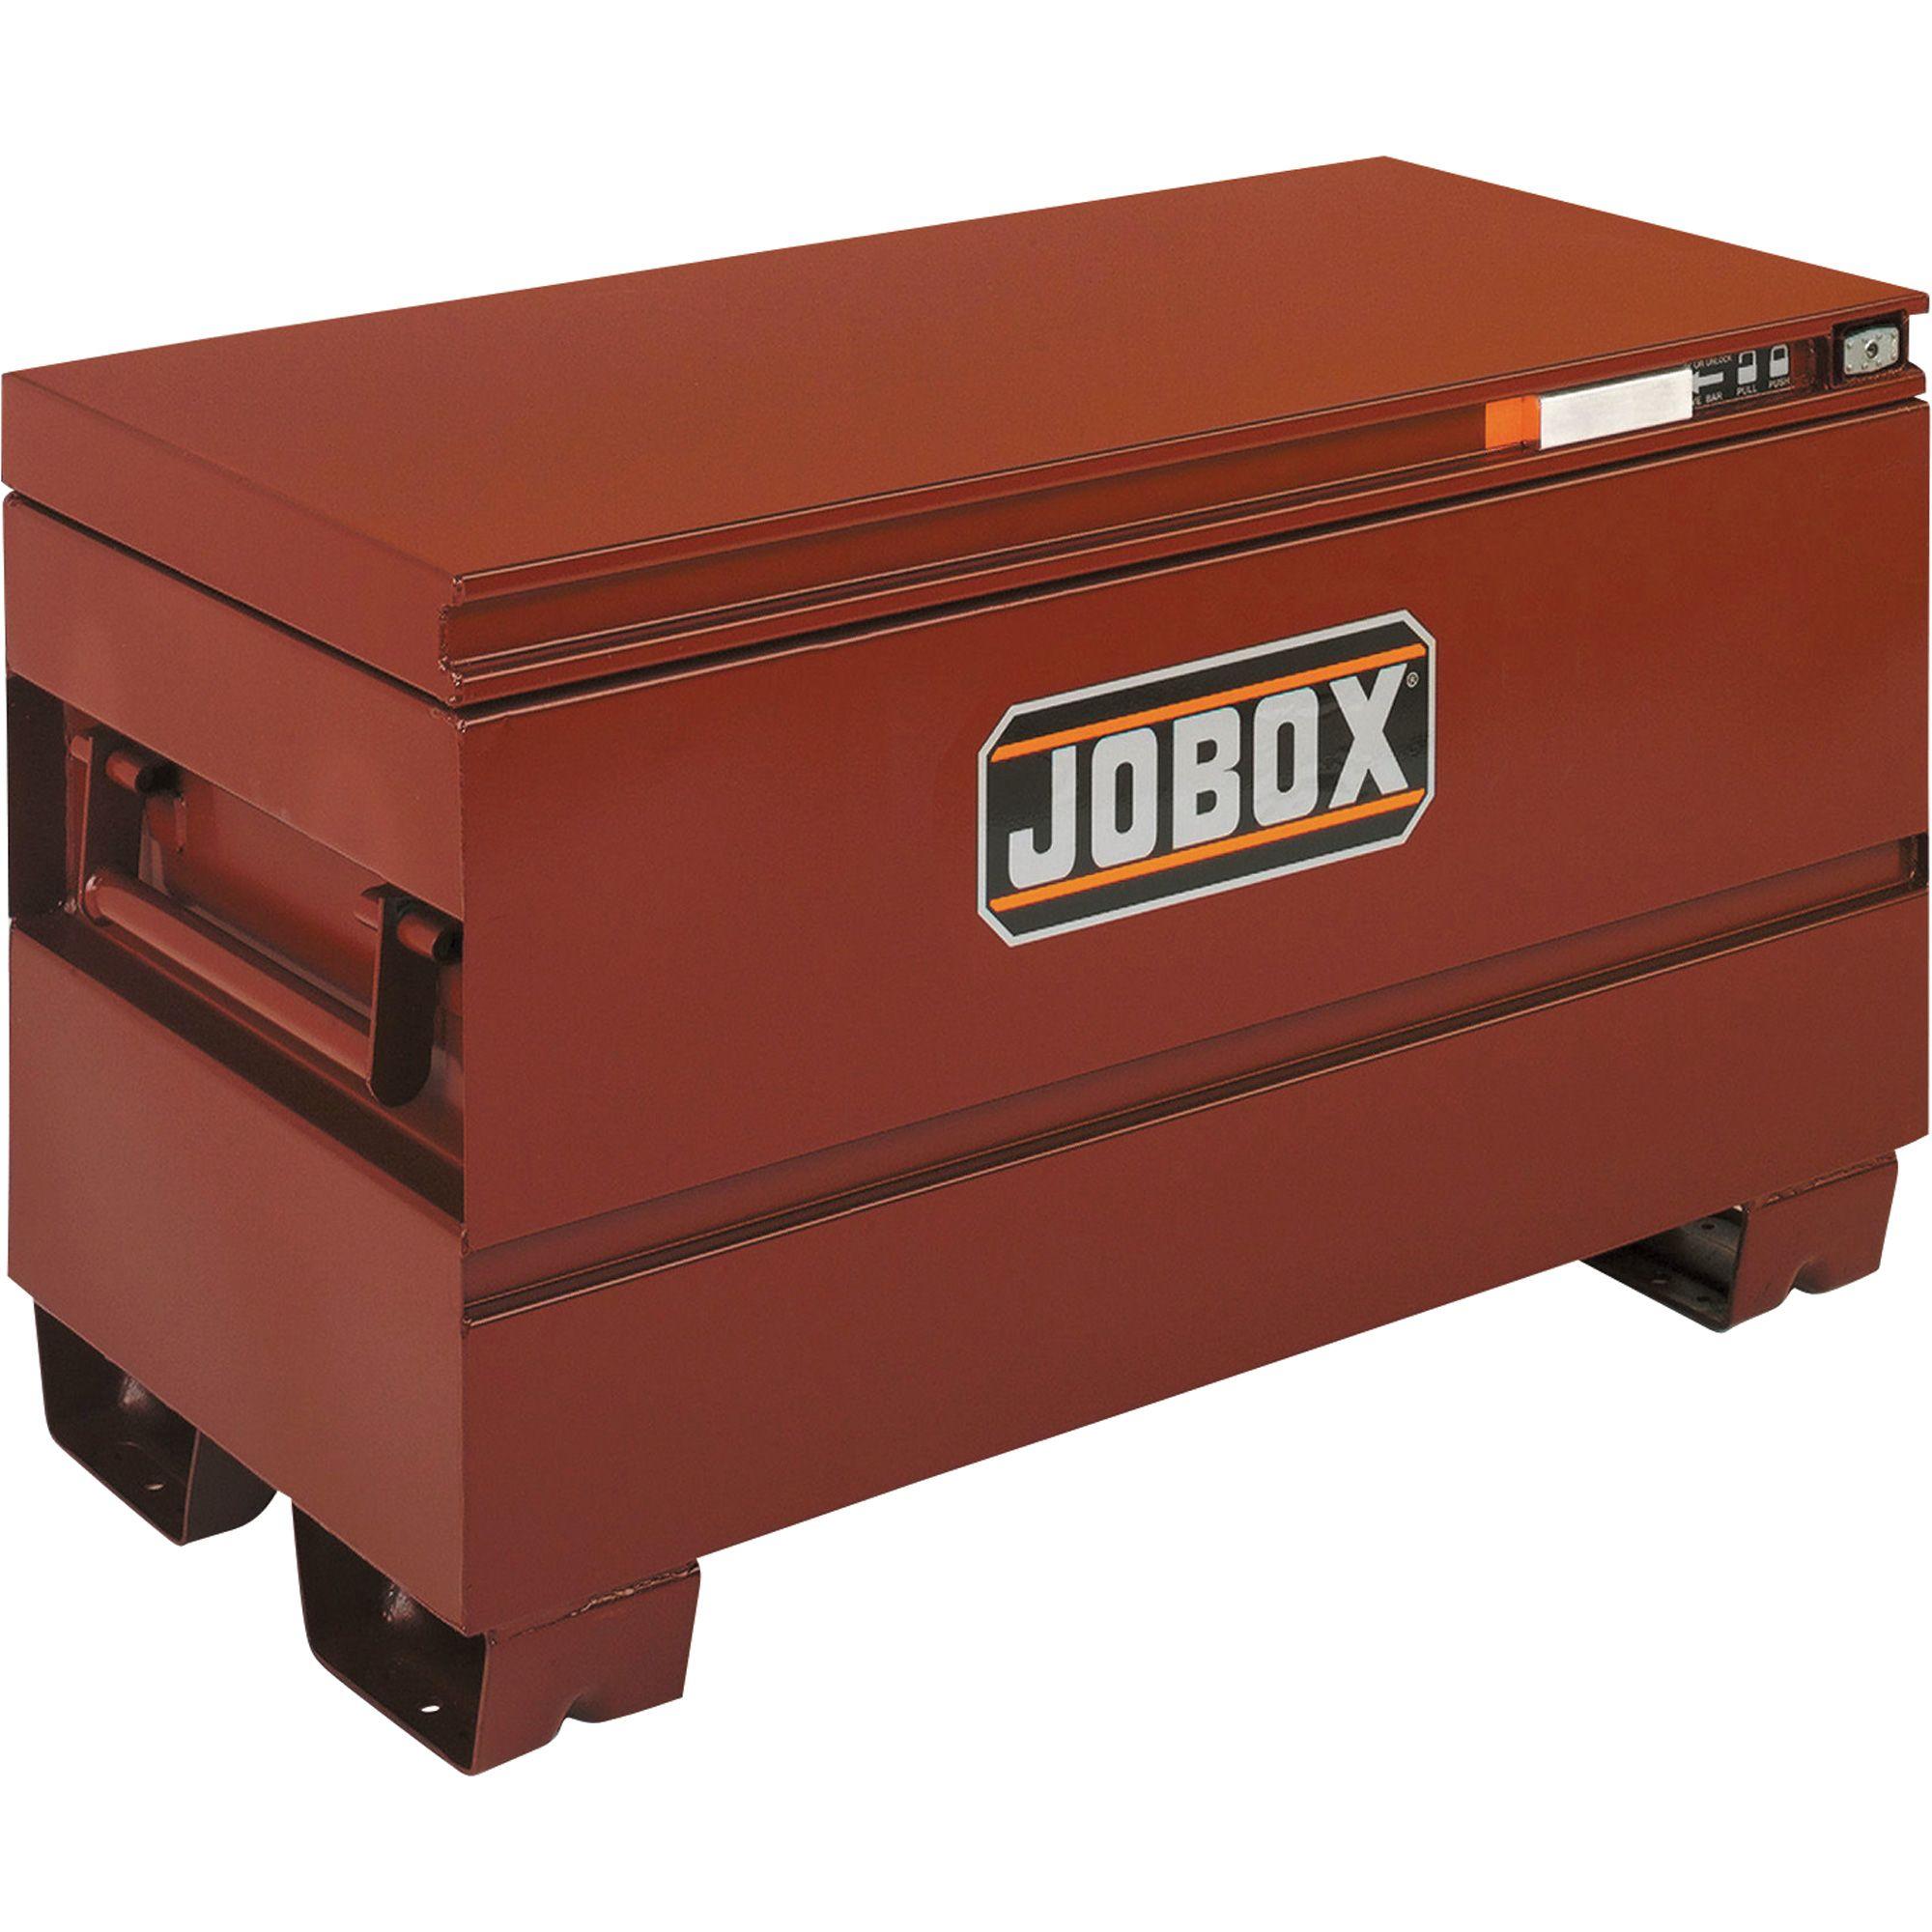 Jobox Logo - Jobox 42in. Heavy Duty Steel Chest